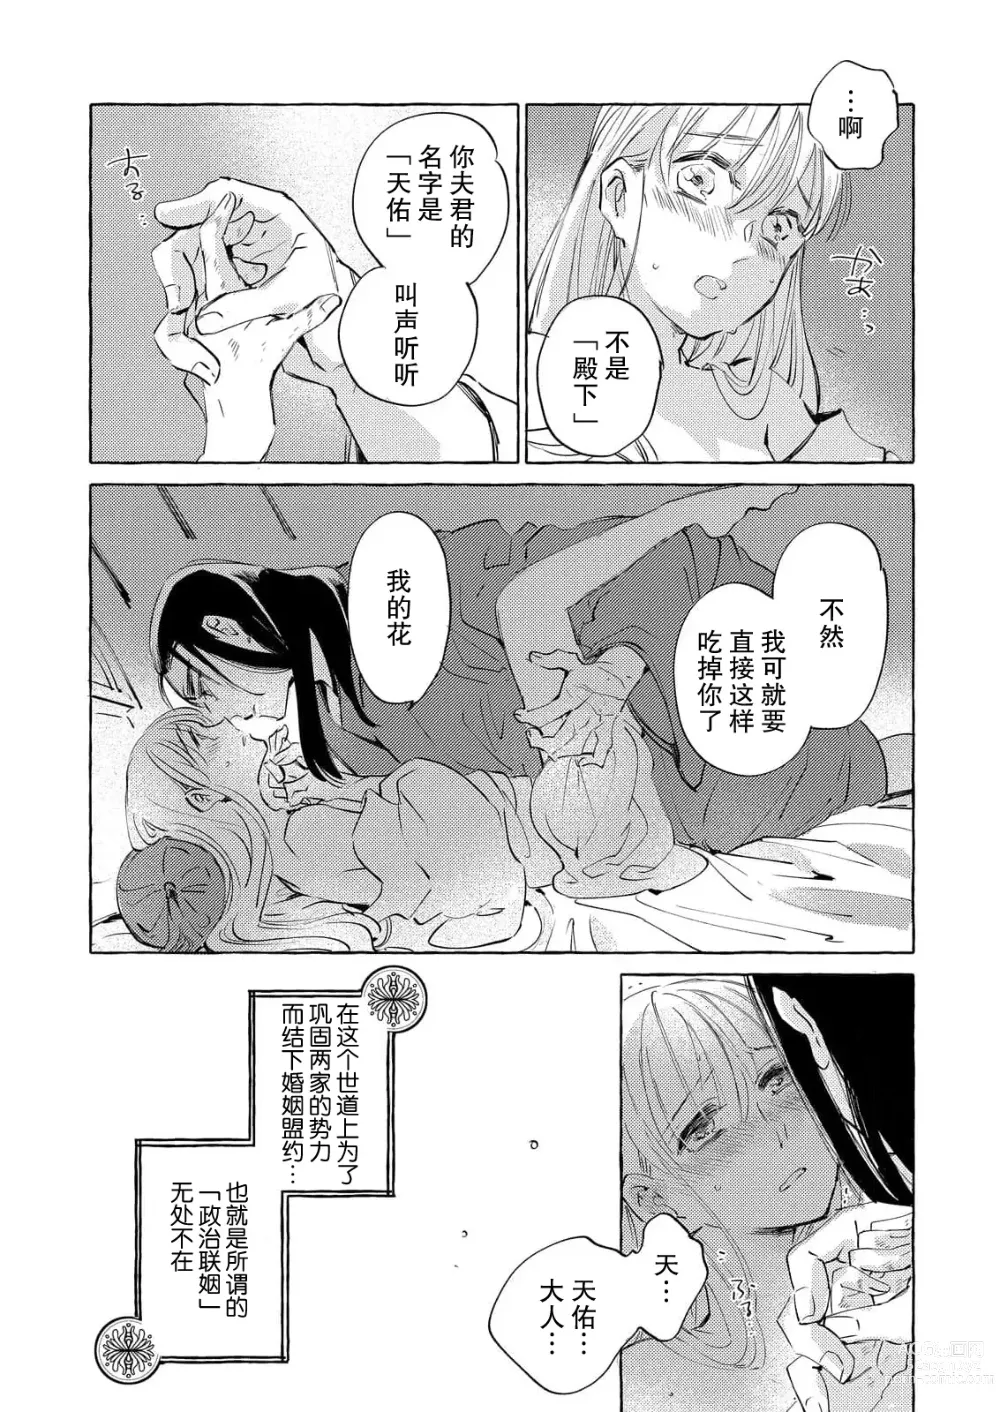 Page 5 of manga 无限宠爱新娘替嫁~冷酷皇子今夜也宠溺入骨~ 1-2 end